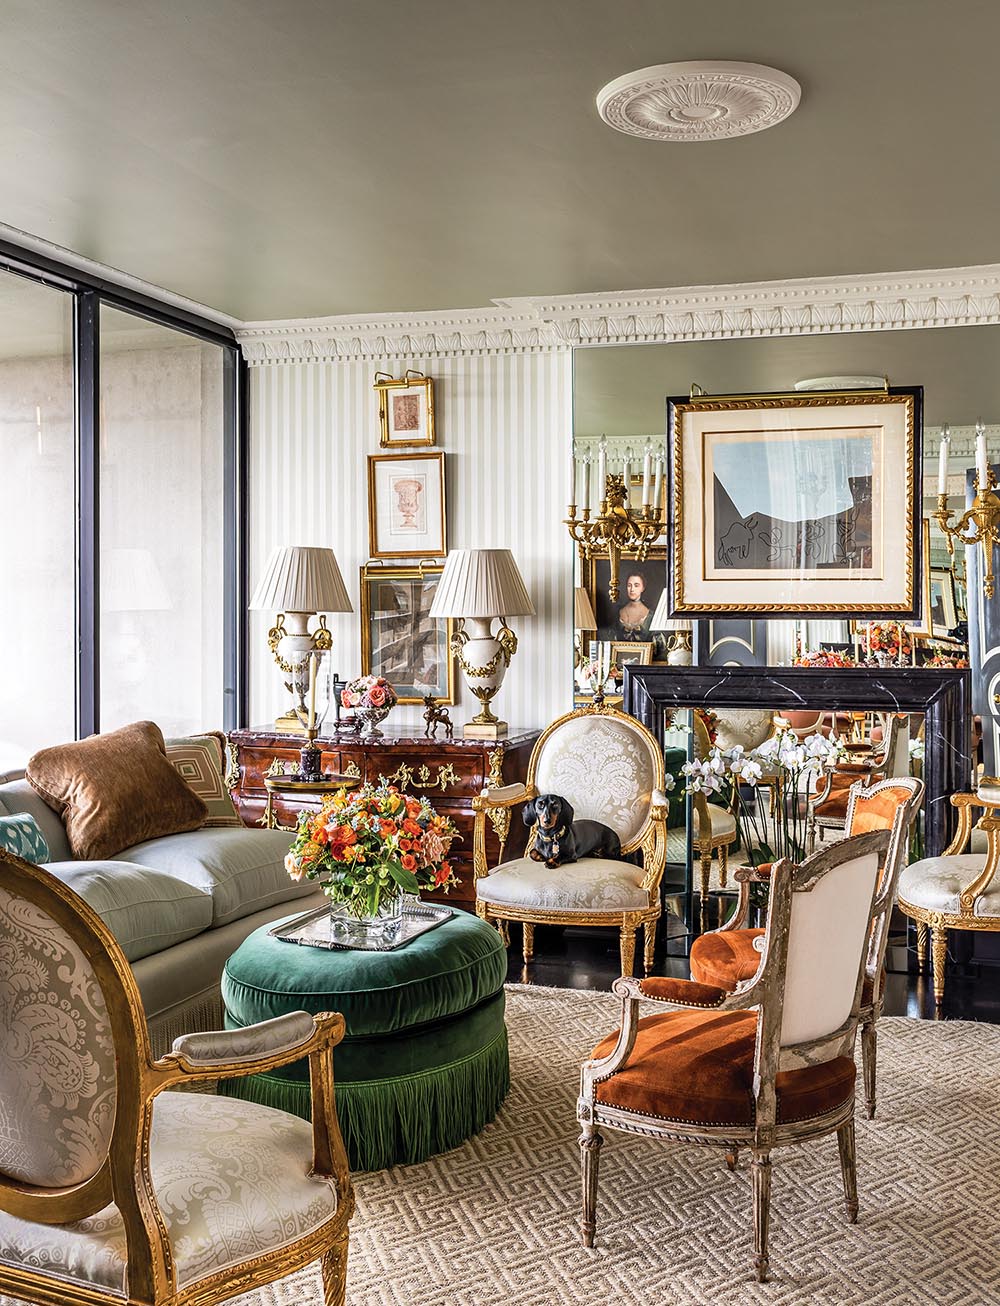 A living room has grey striped wallpaper, antiques, floral arrangements, and a dog.